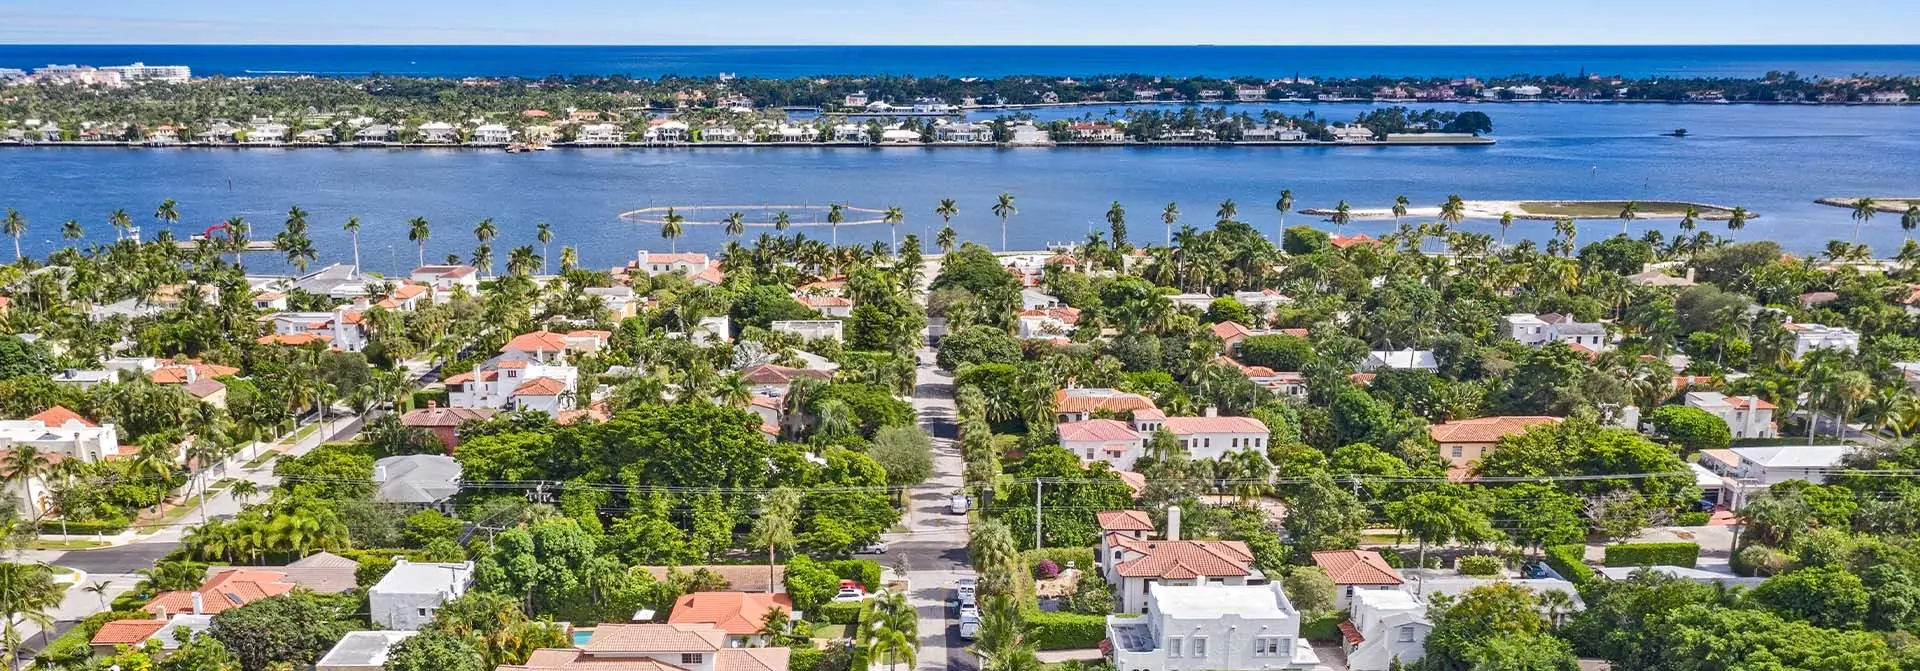 El Cid West Palm Beach Homes for Sale | El Cid Historic District